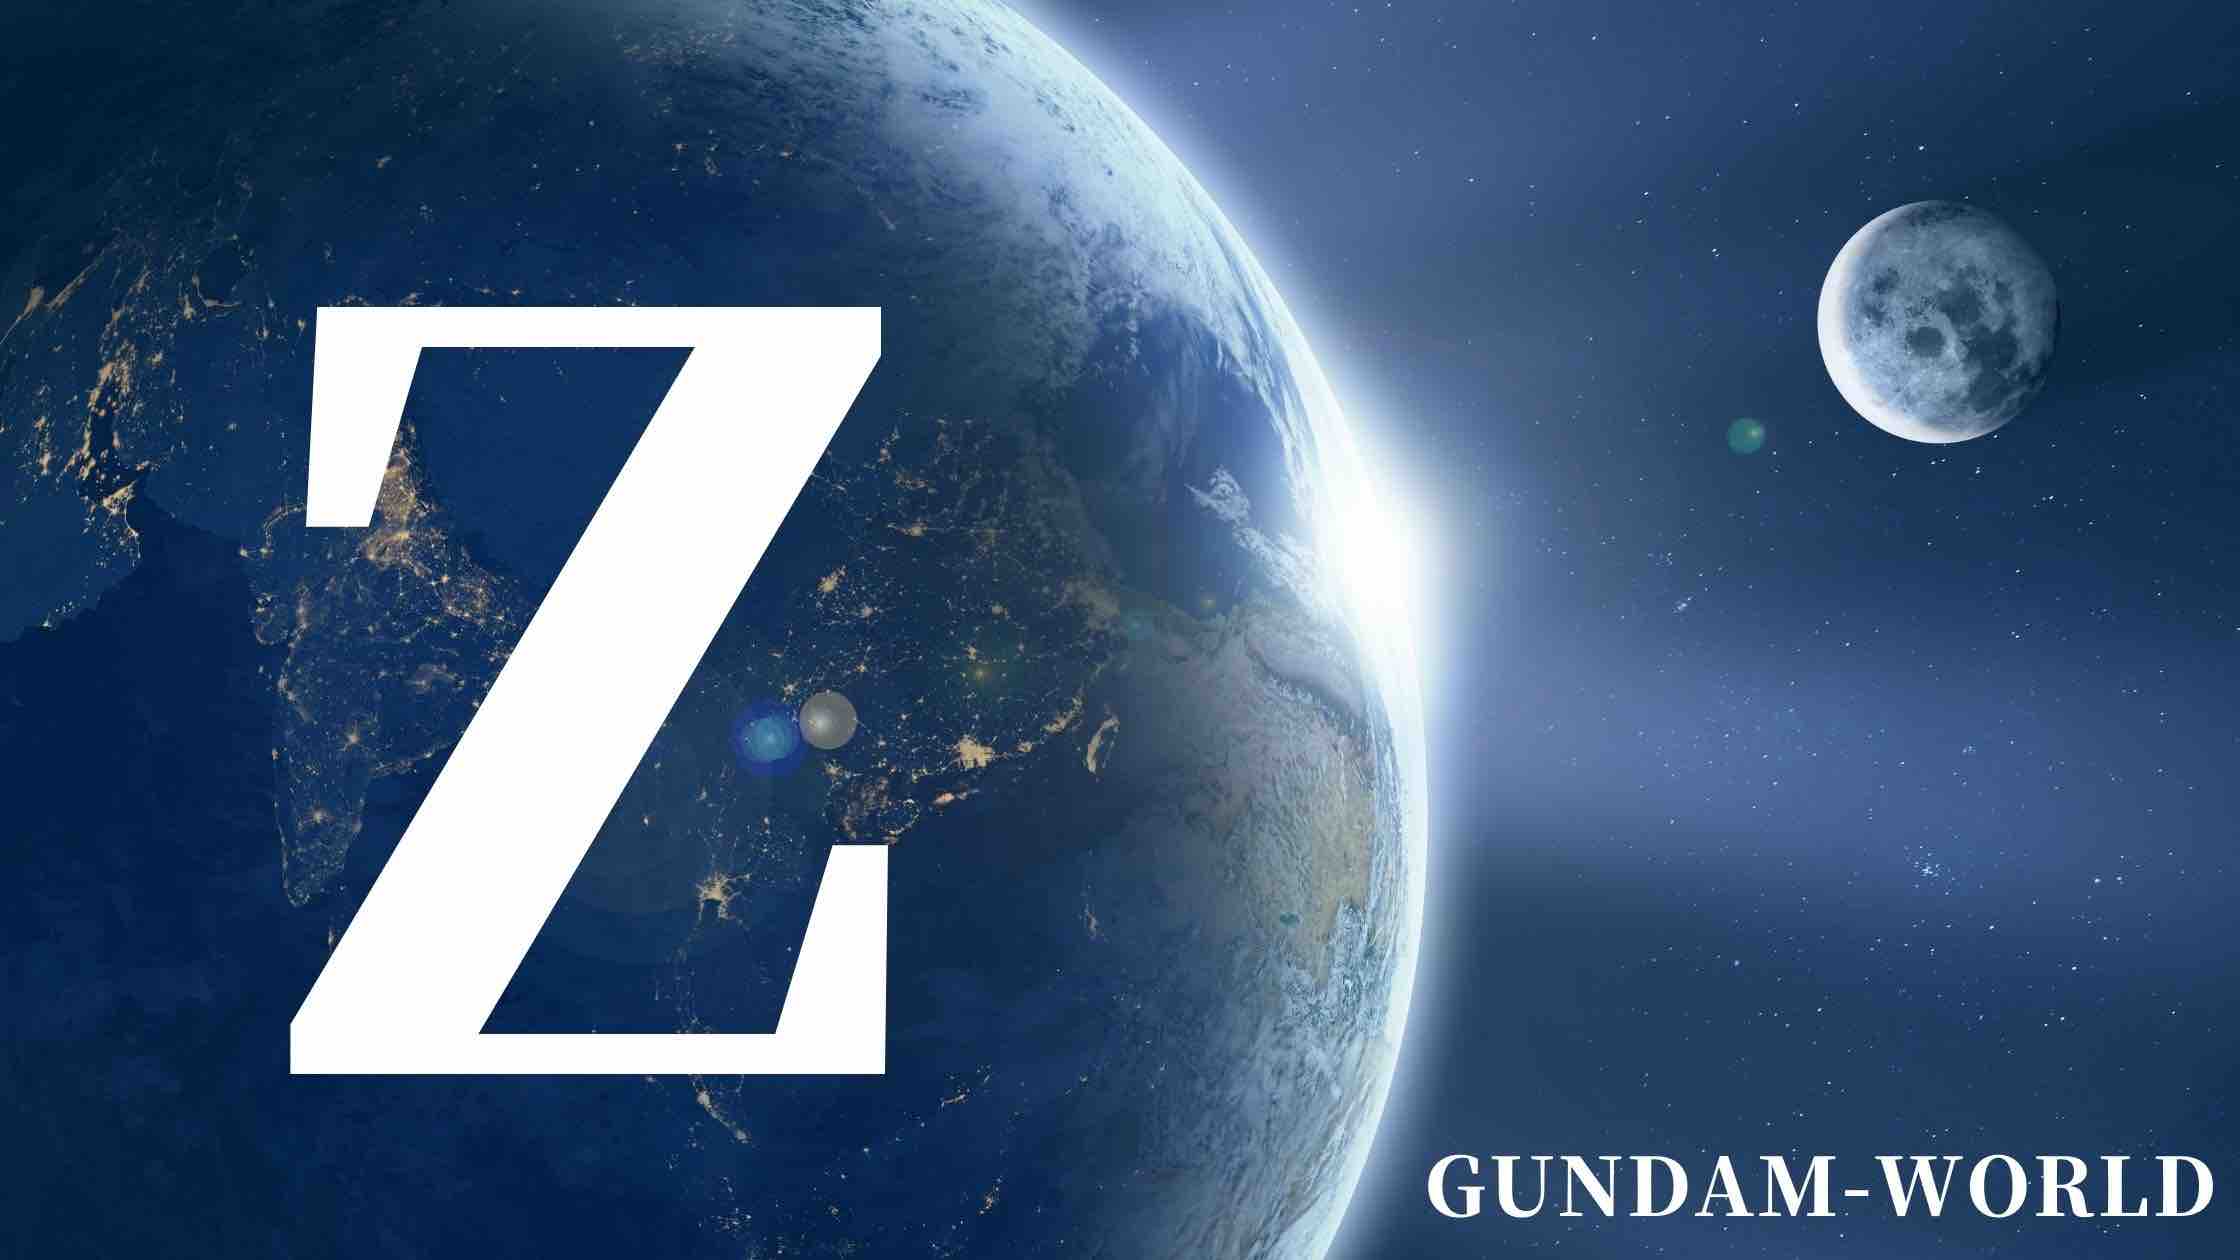 Z-GUNDAM